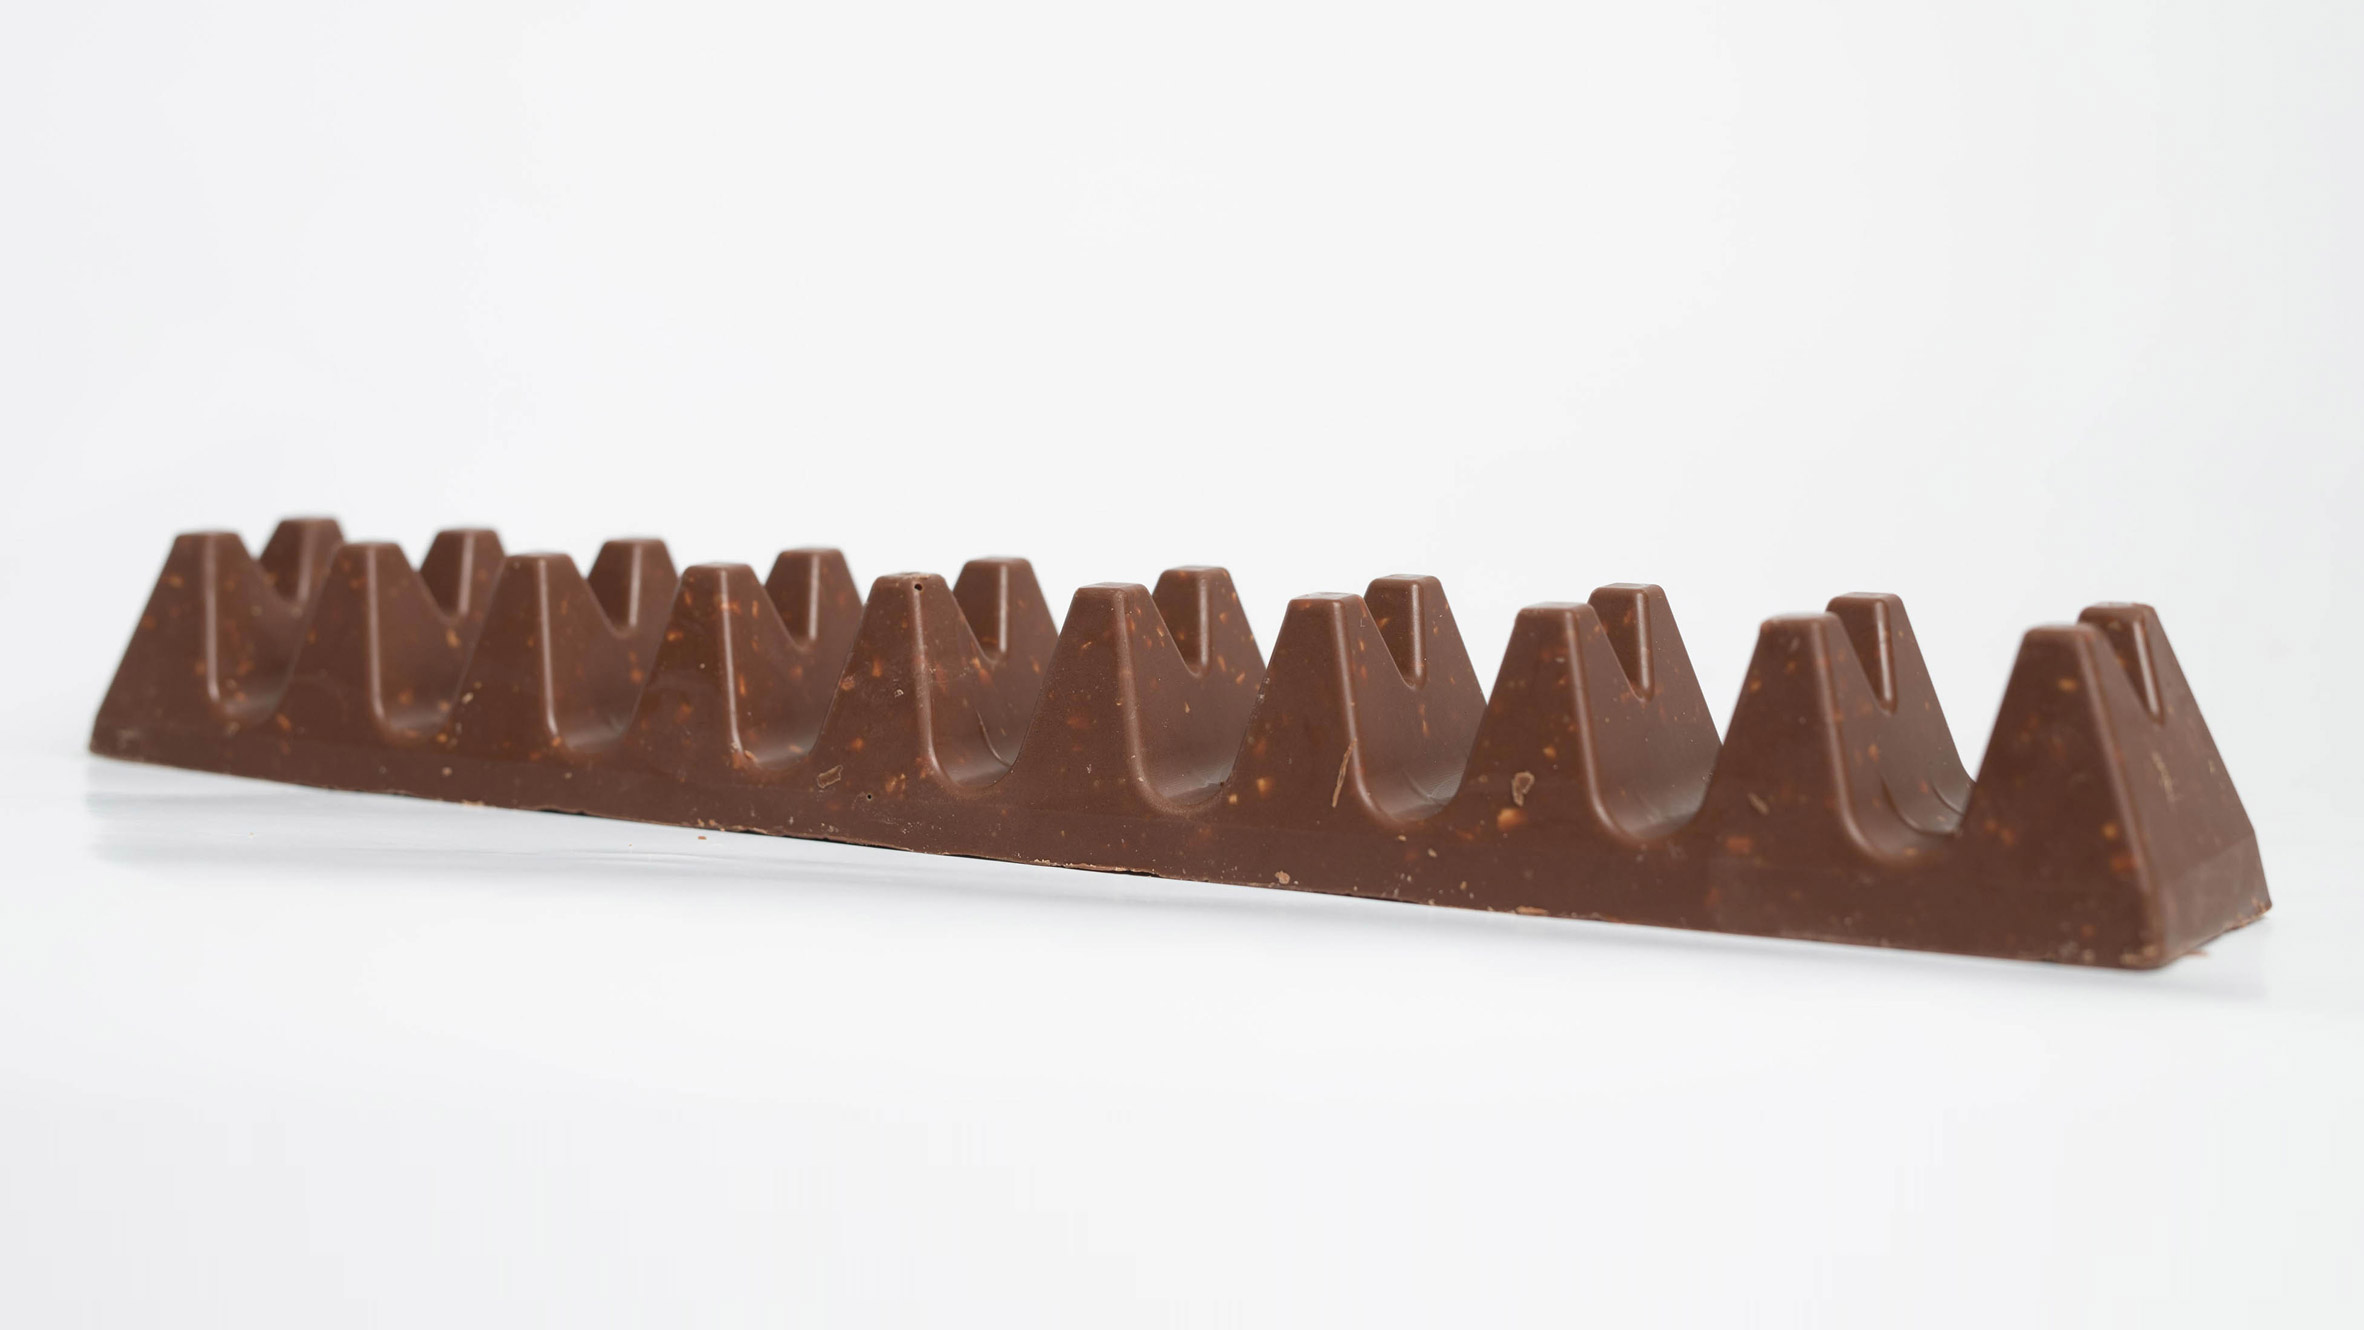 Poundland set to challenge Toblerone's trademarked chocolate bar shape in court